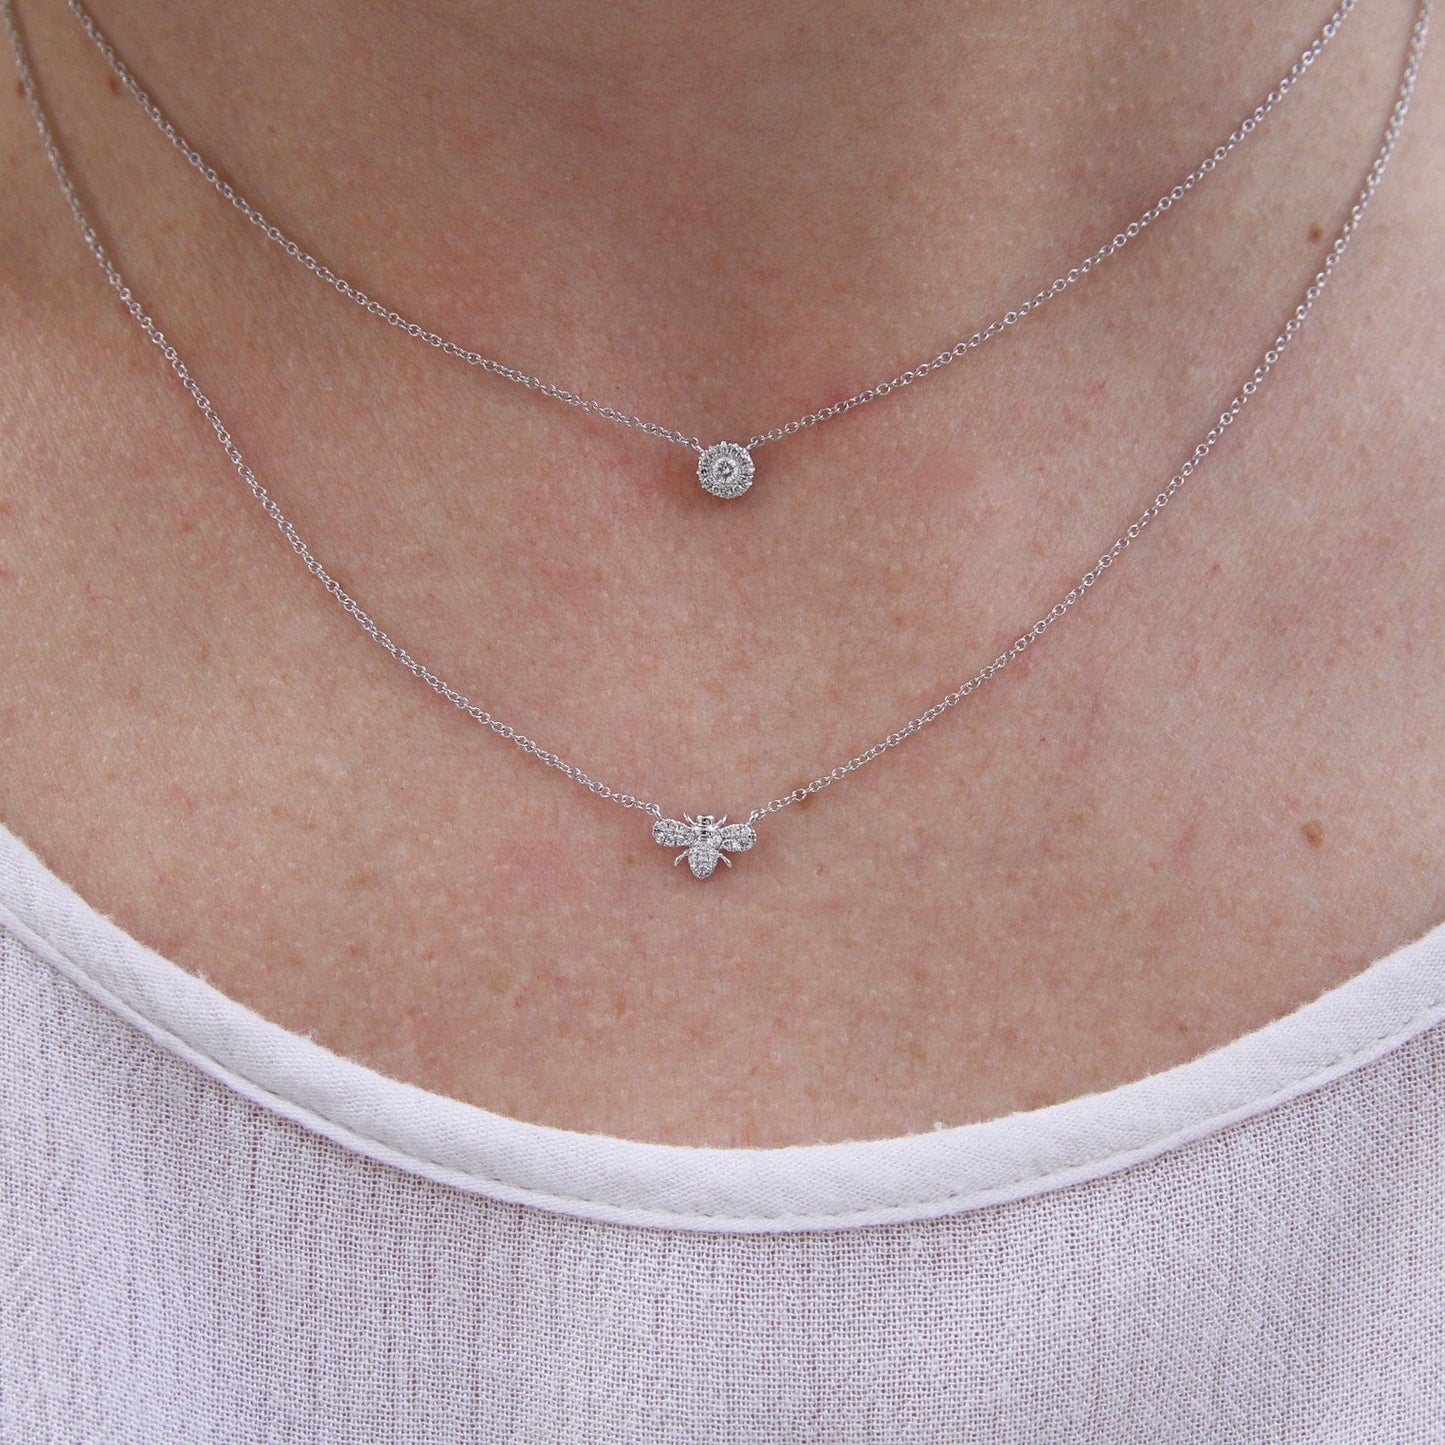 NKL-14K Petite Diamond Bee Necklace - 14K White Gold